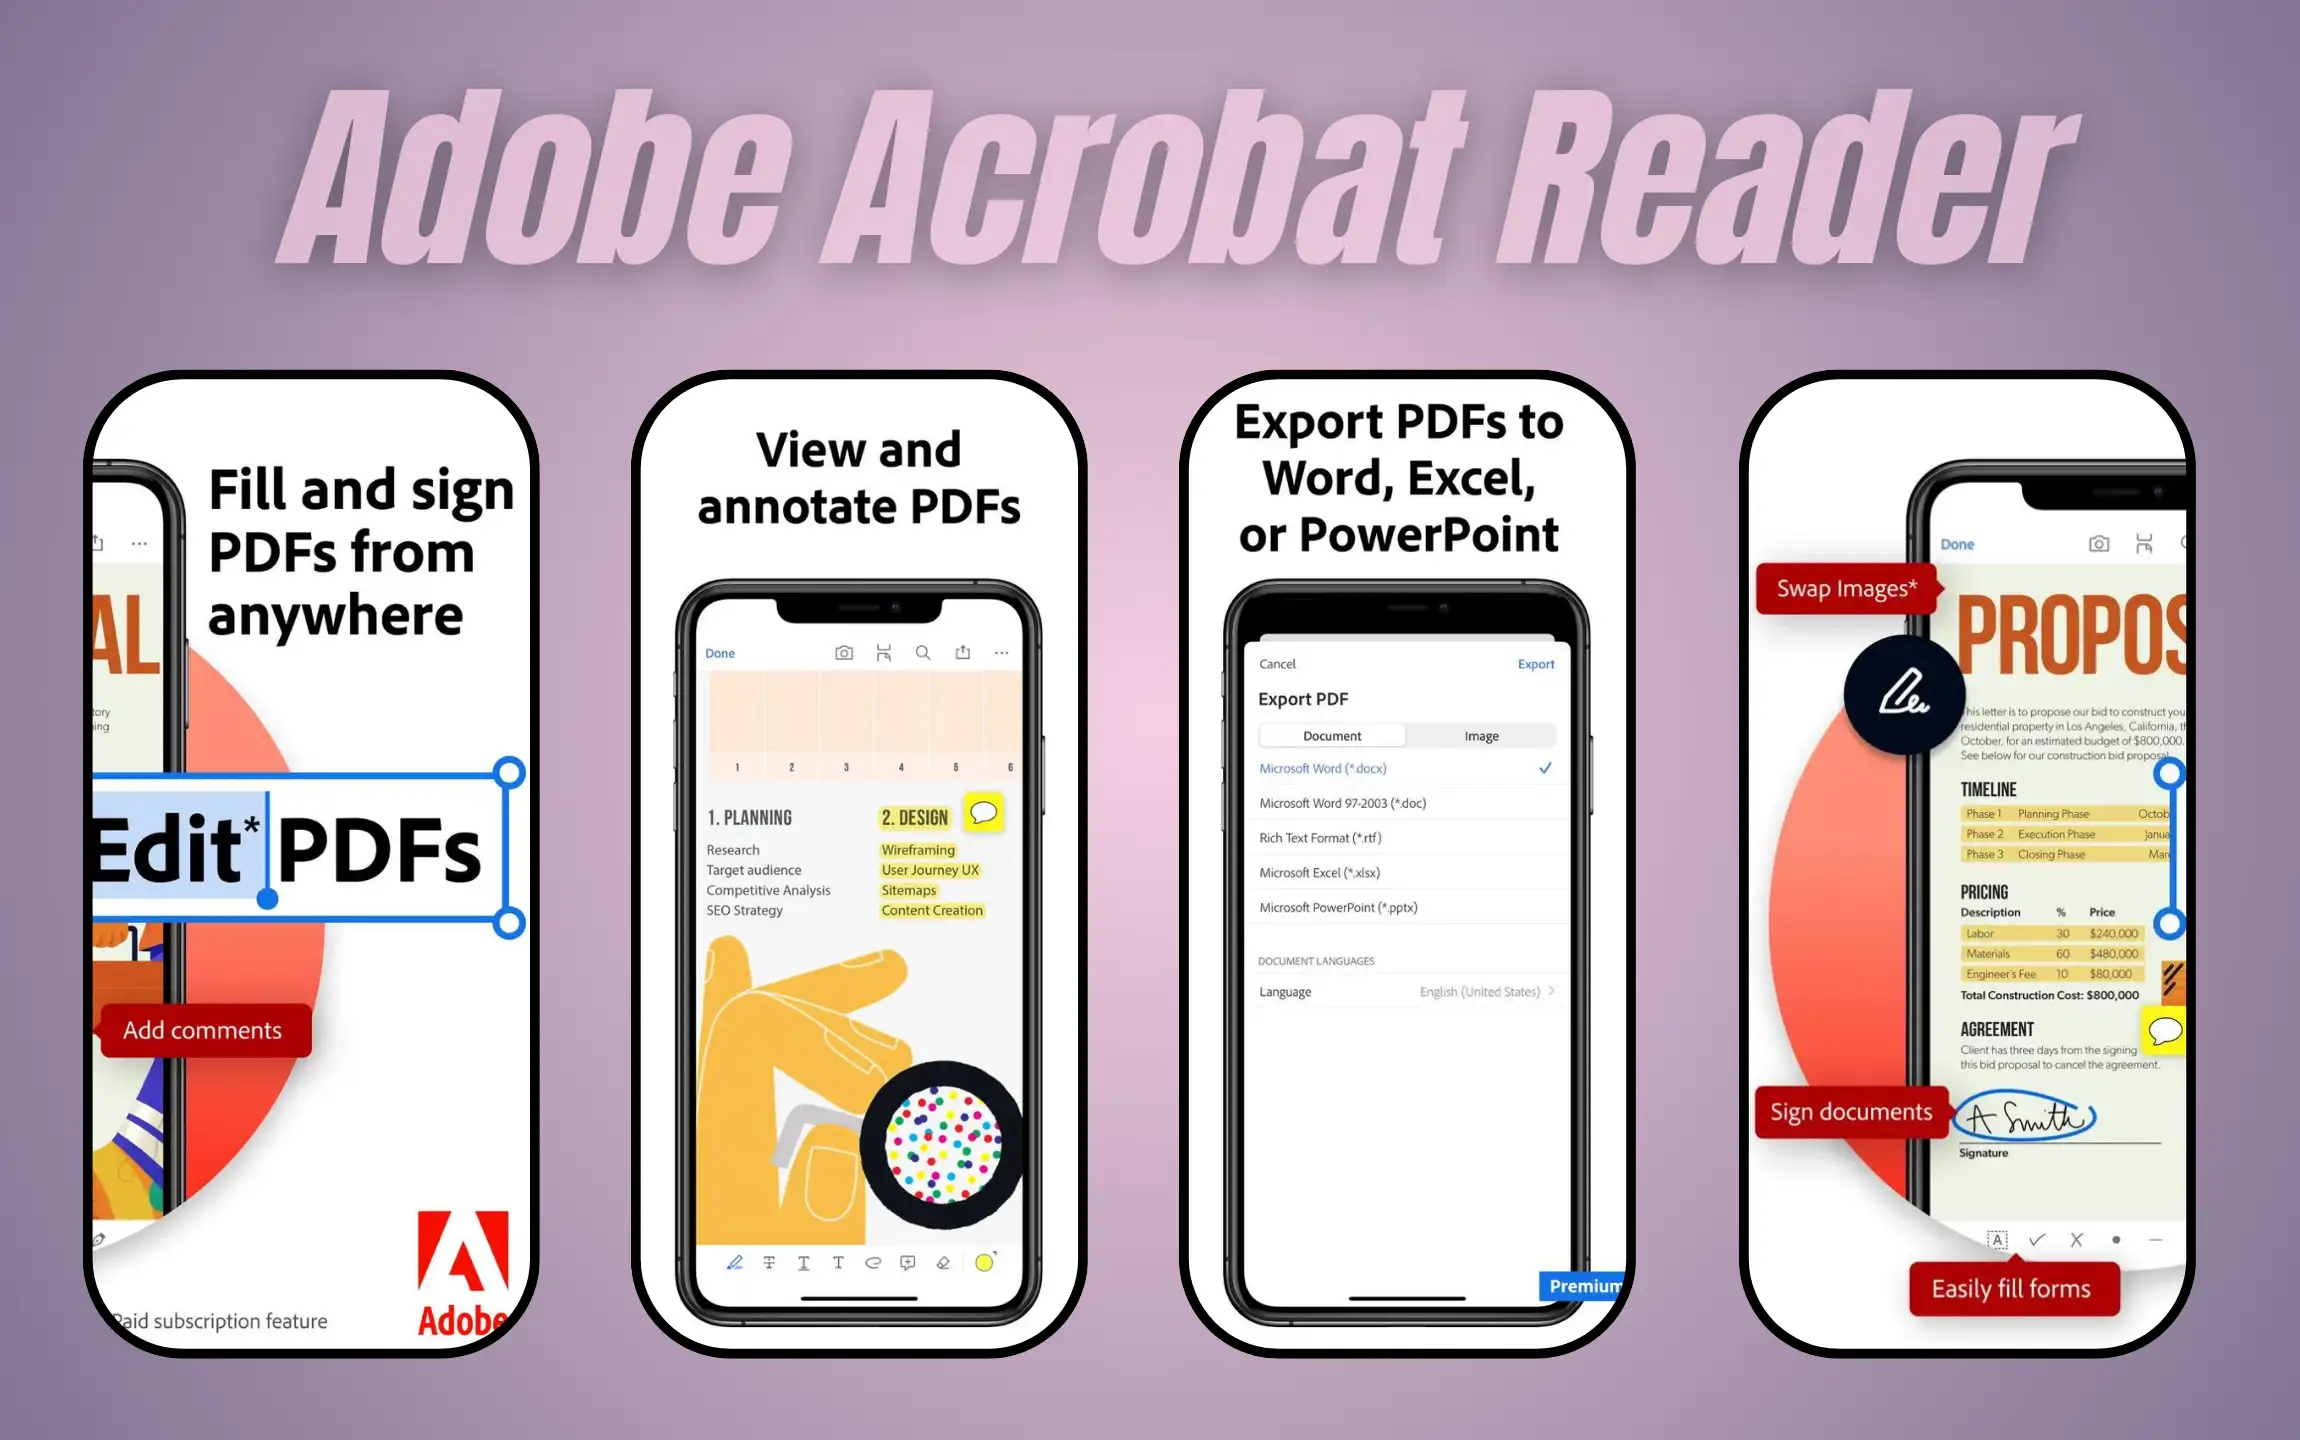 Adobe Acrobat Reader Convert Word to PDF on iPhone and iPad